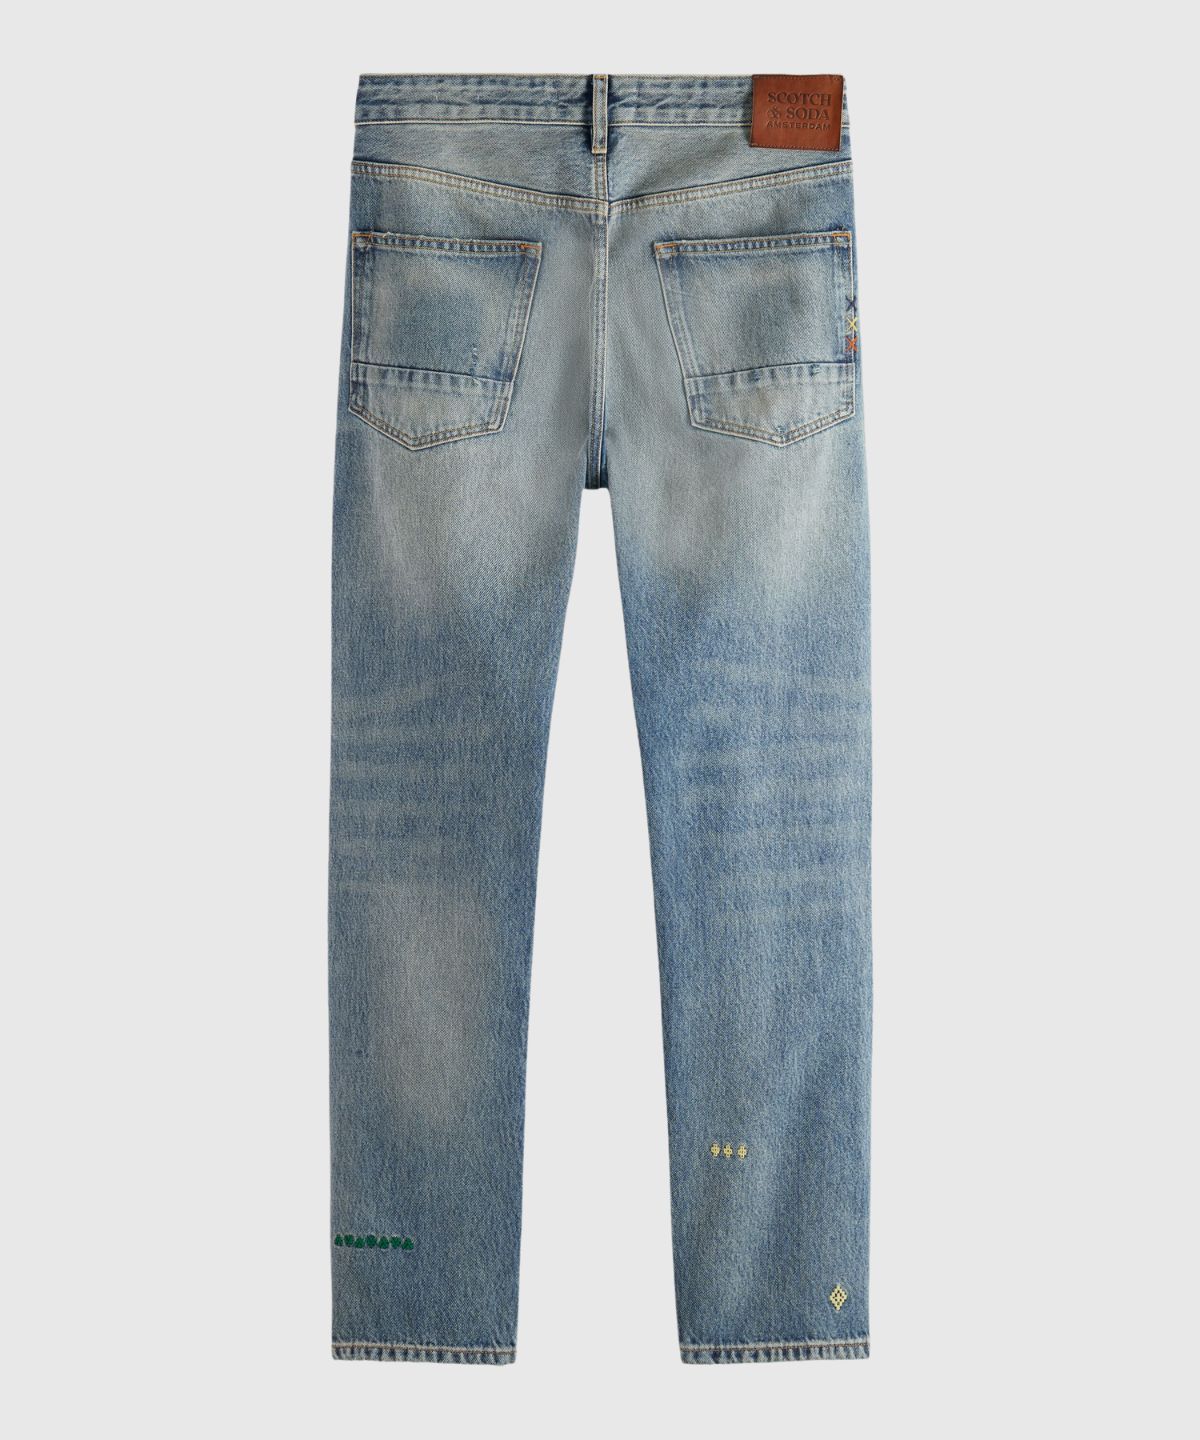 The Ralston premium regular slim jeans – Headline Act